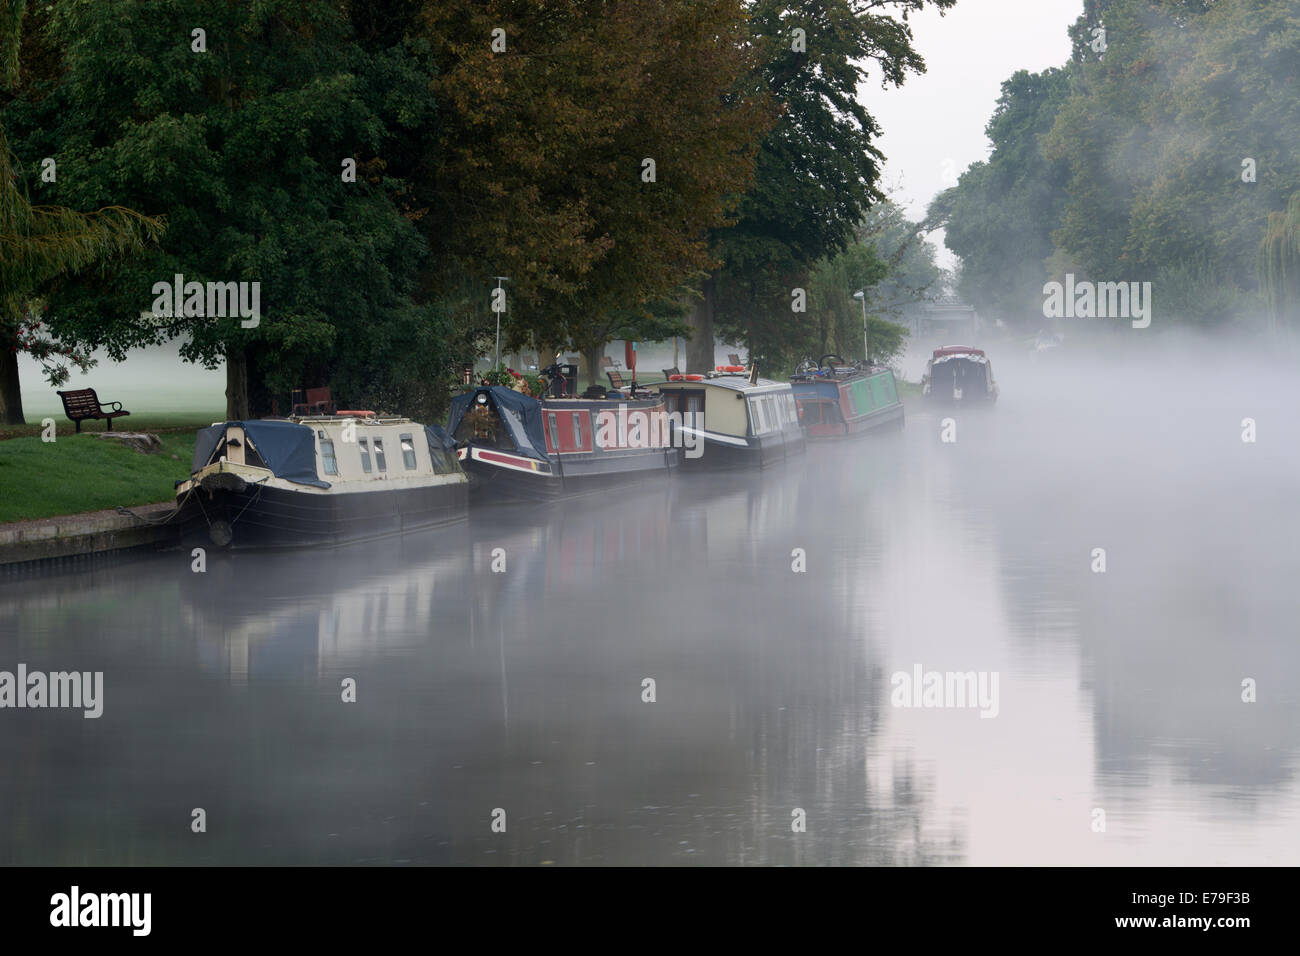 Narrowboats moored on River Avon, misty at dawn, Stratford-upon-Avon, UK Stock Photo